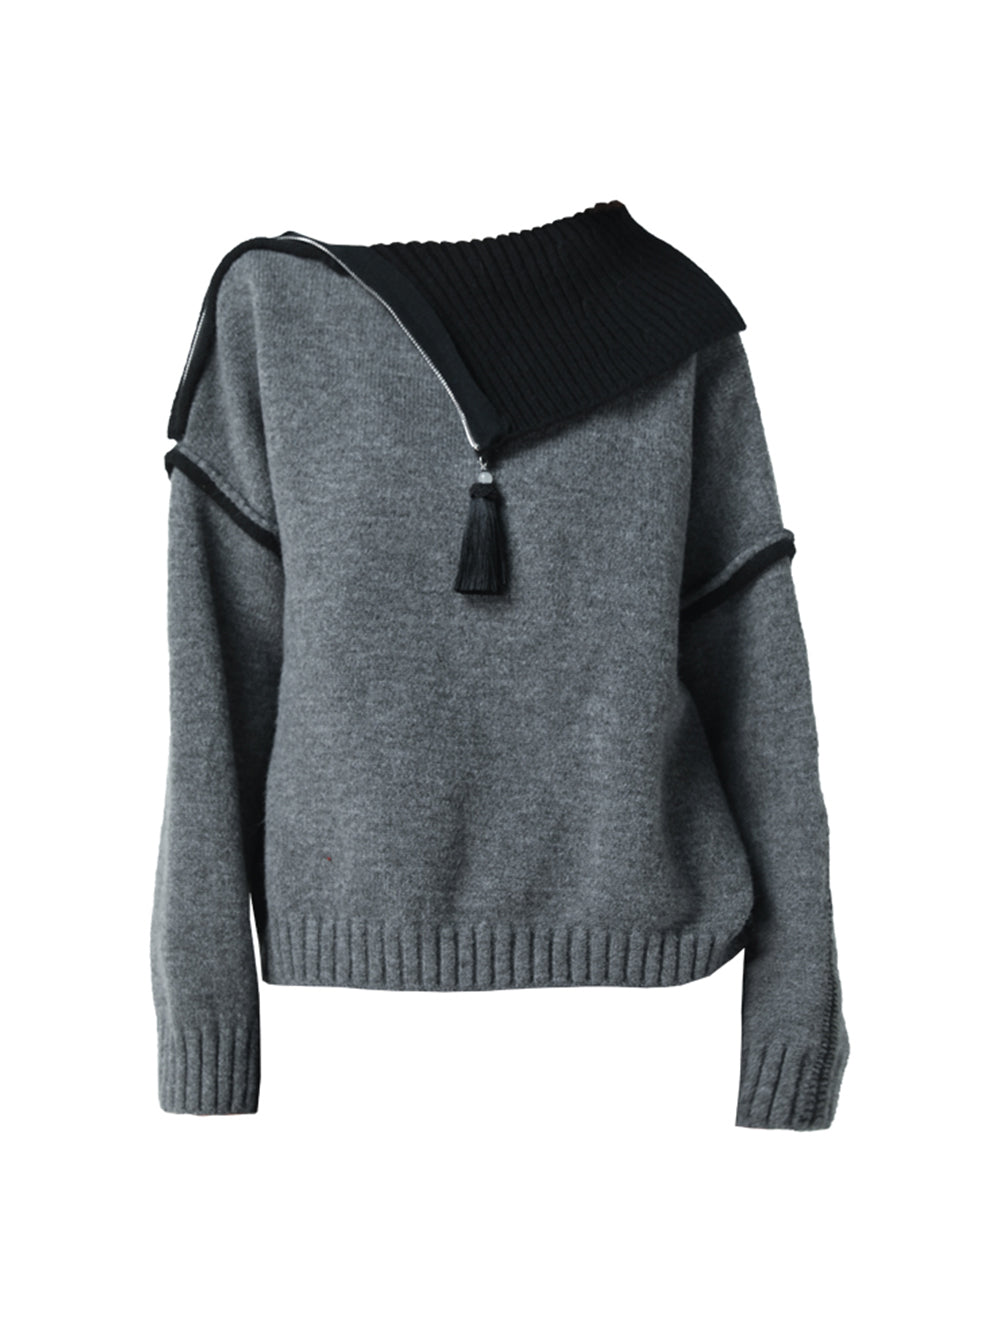 MUKTANK x CUUDICLAB Gray Tassel Sweater